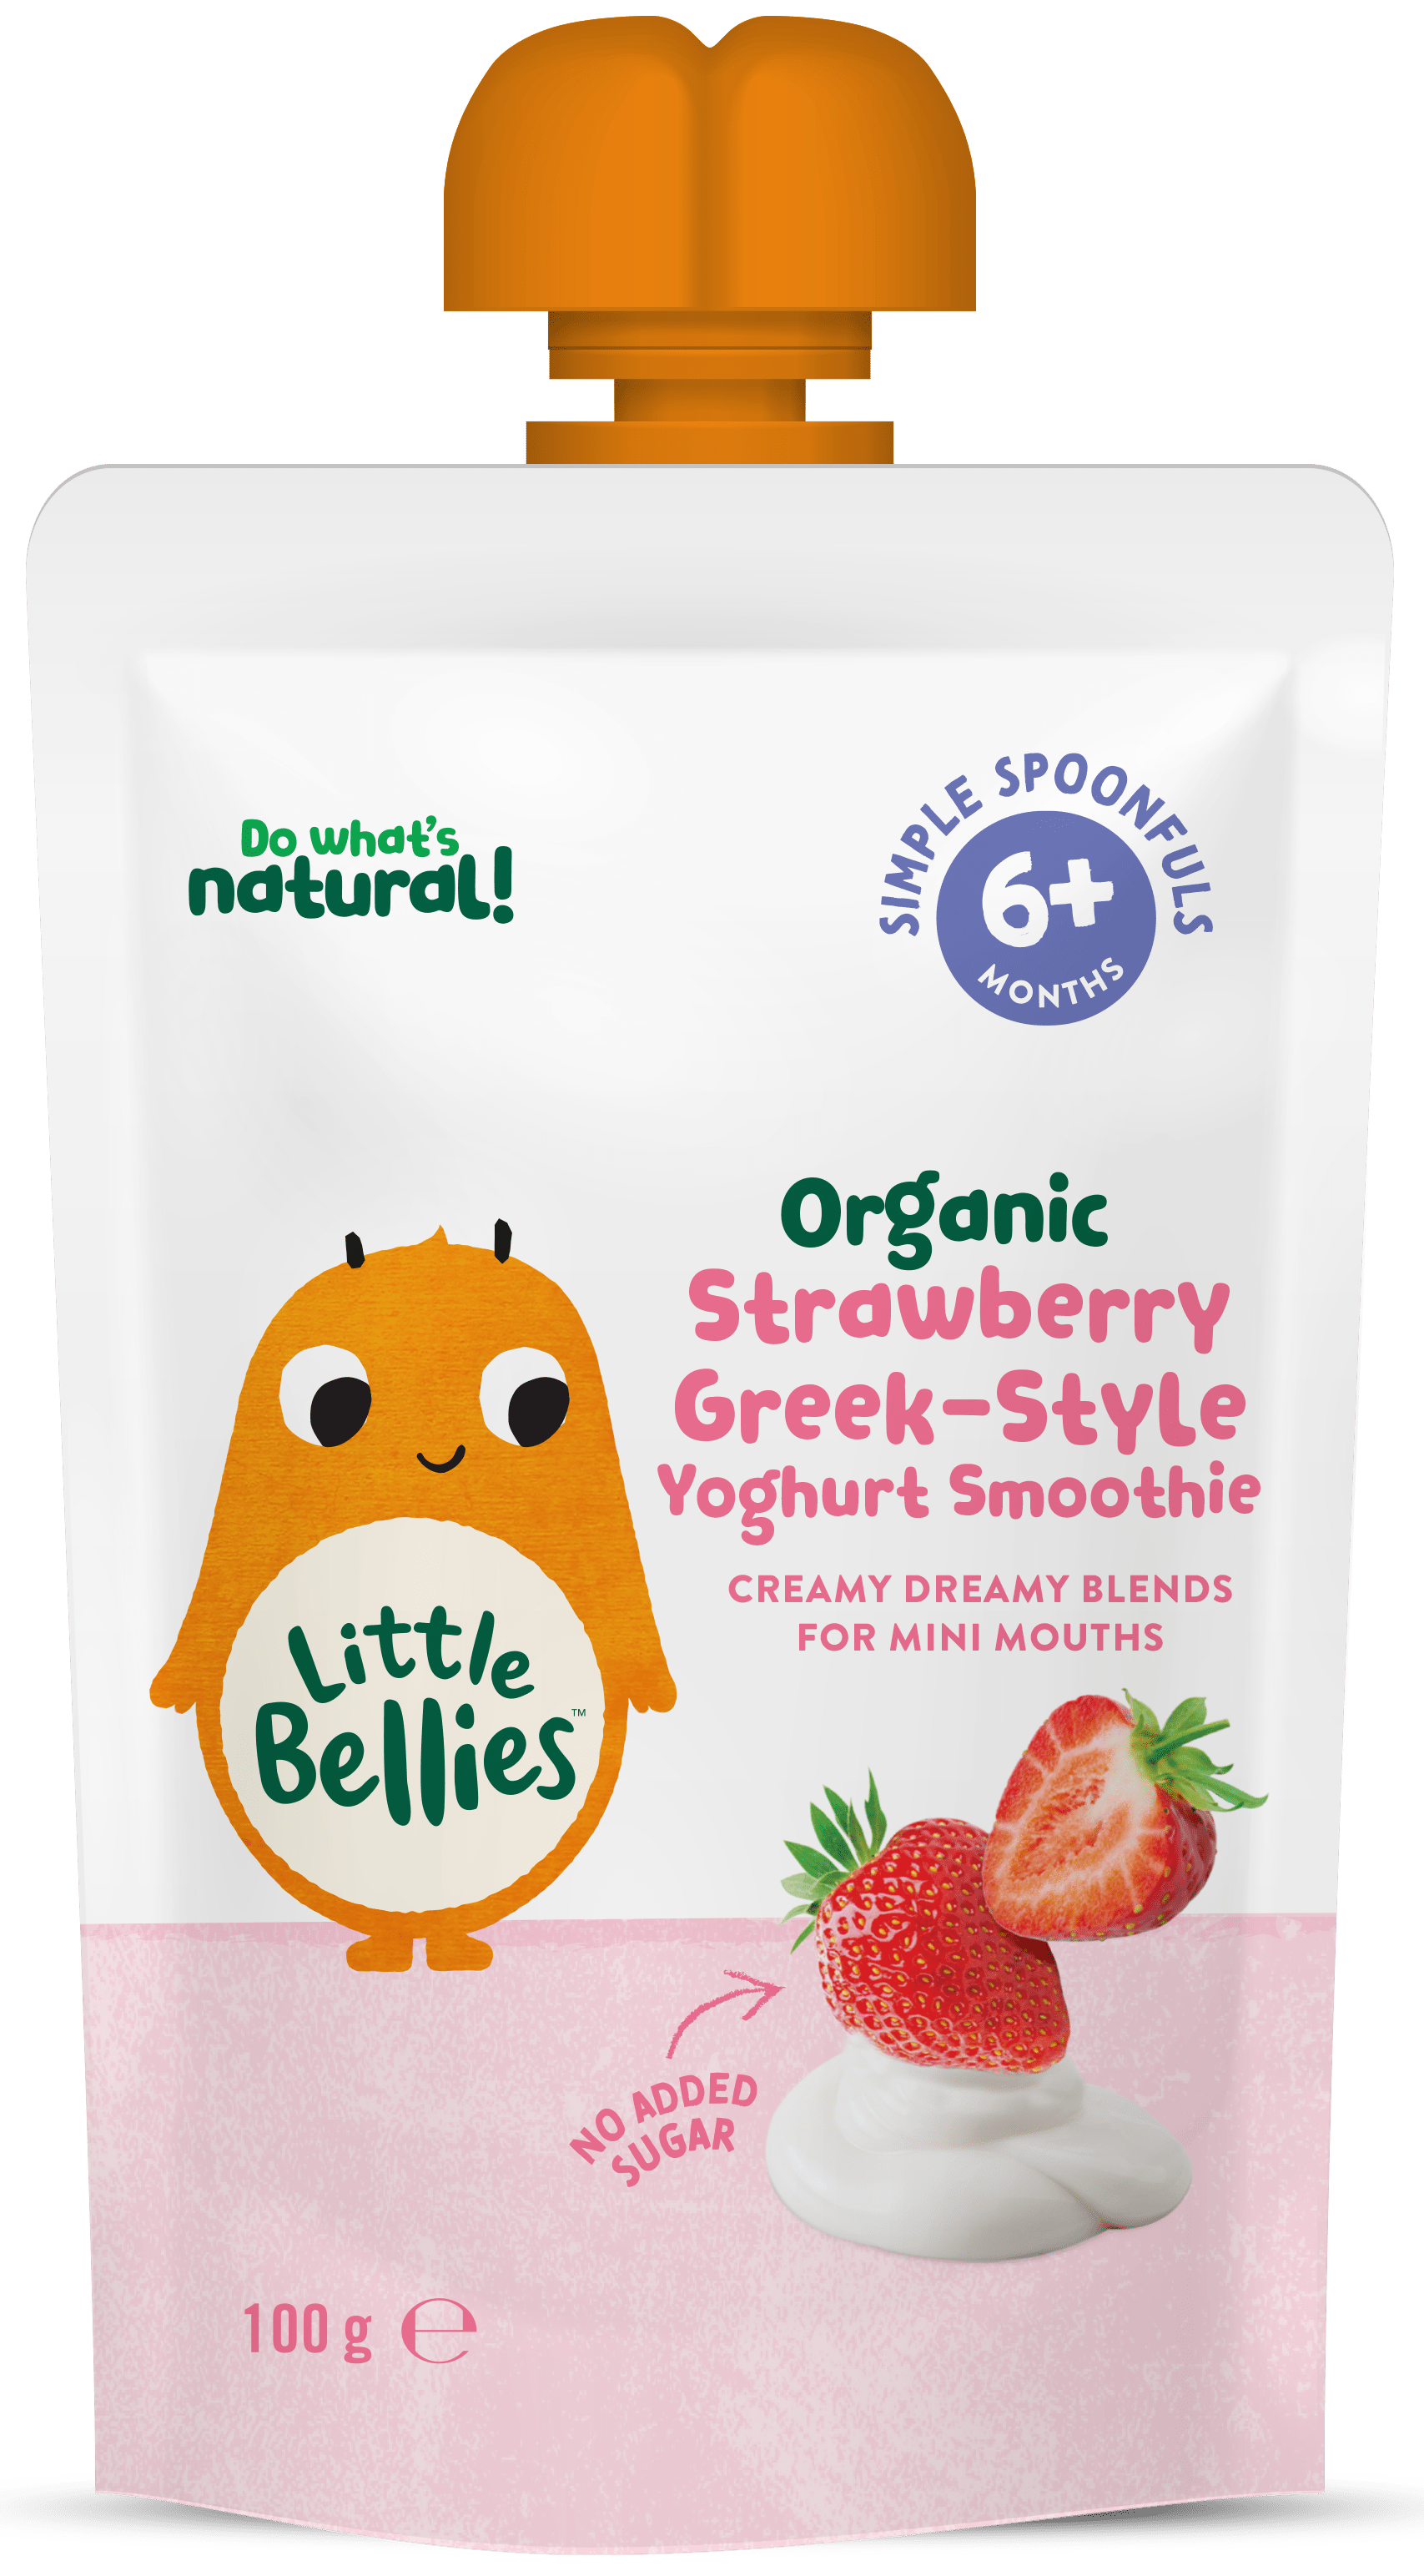 Organic Strawberry Greek-Style Yoghurt Smoothie